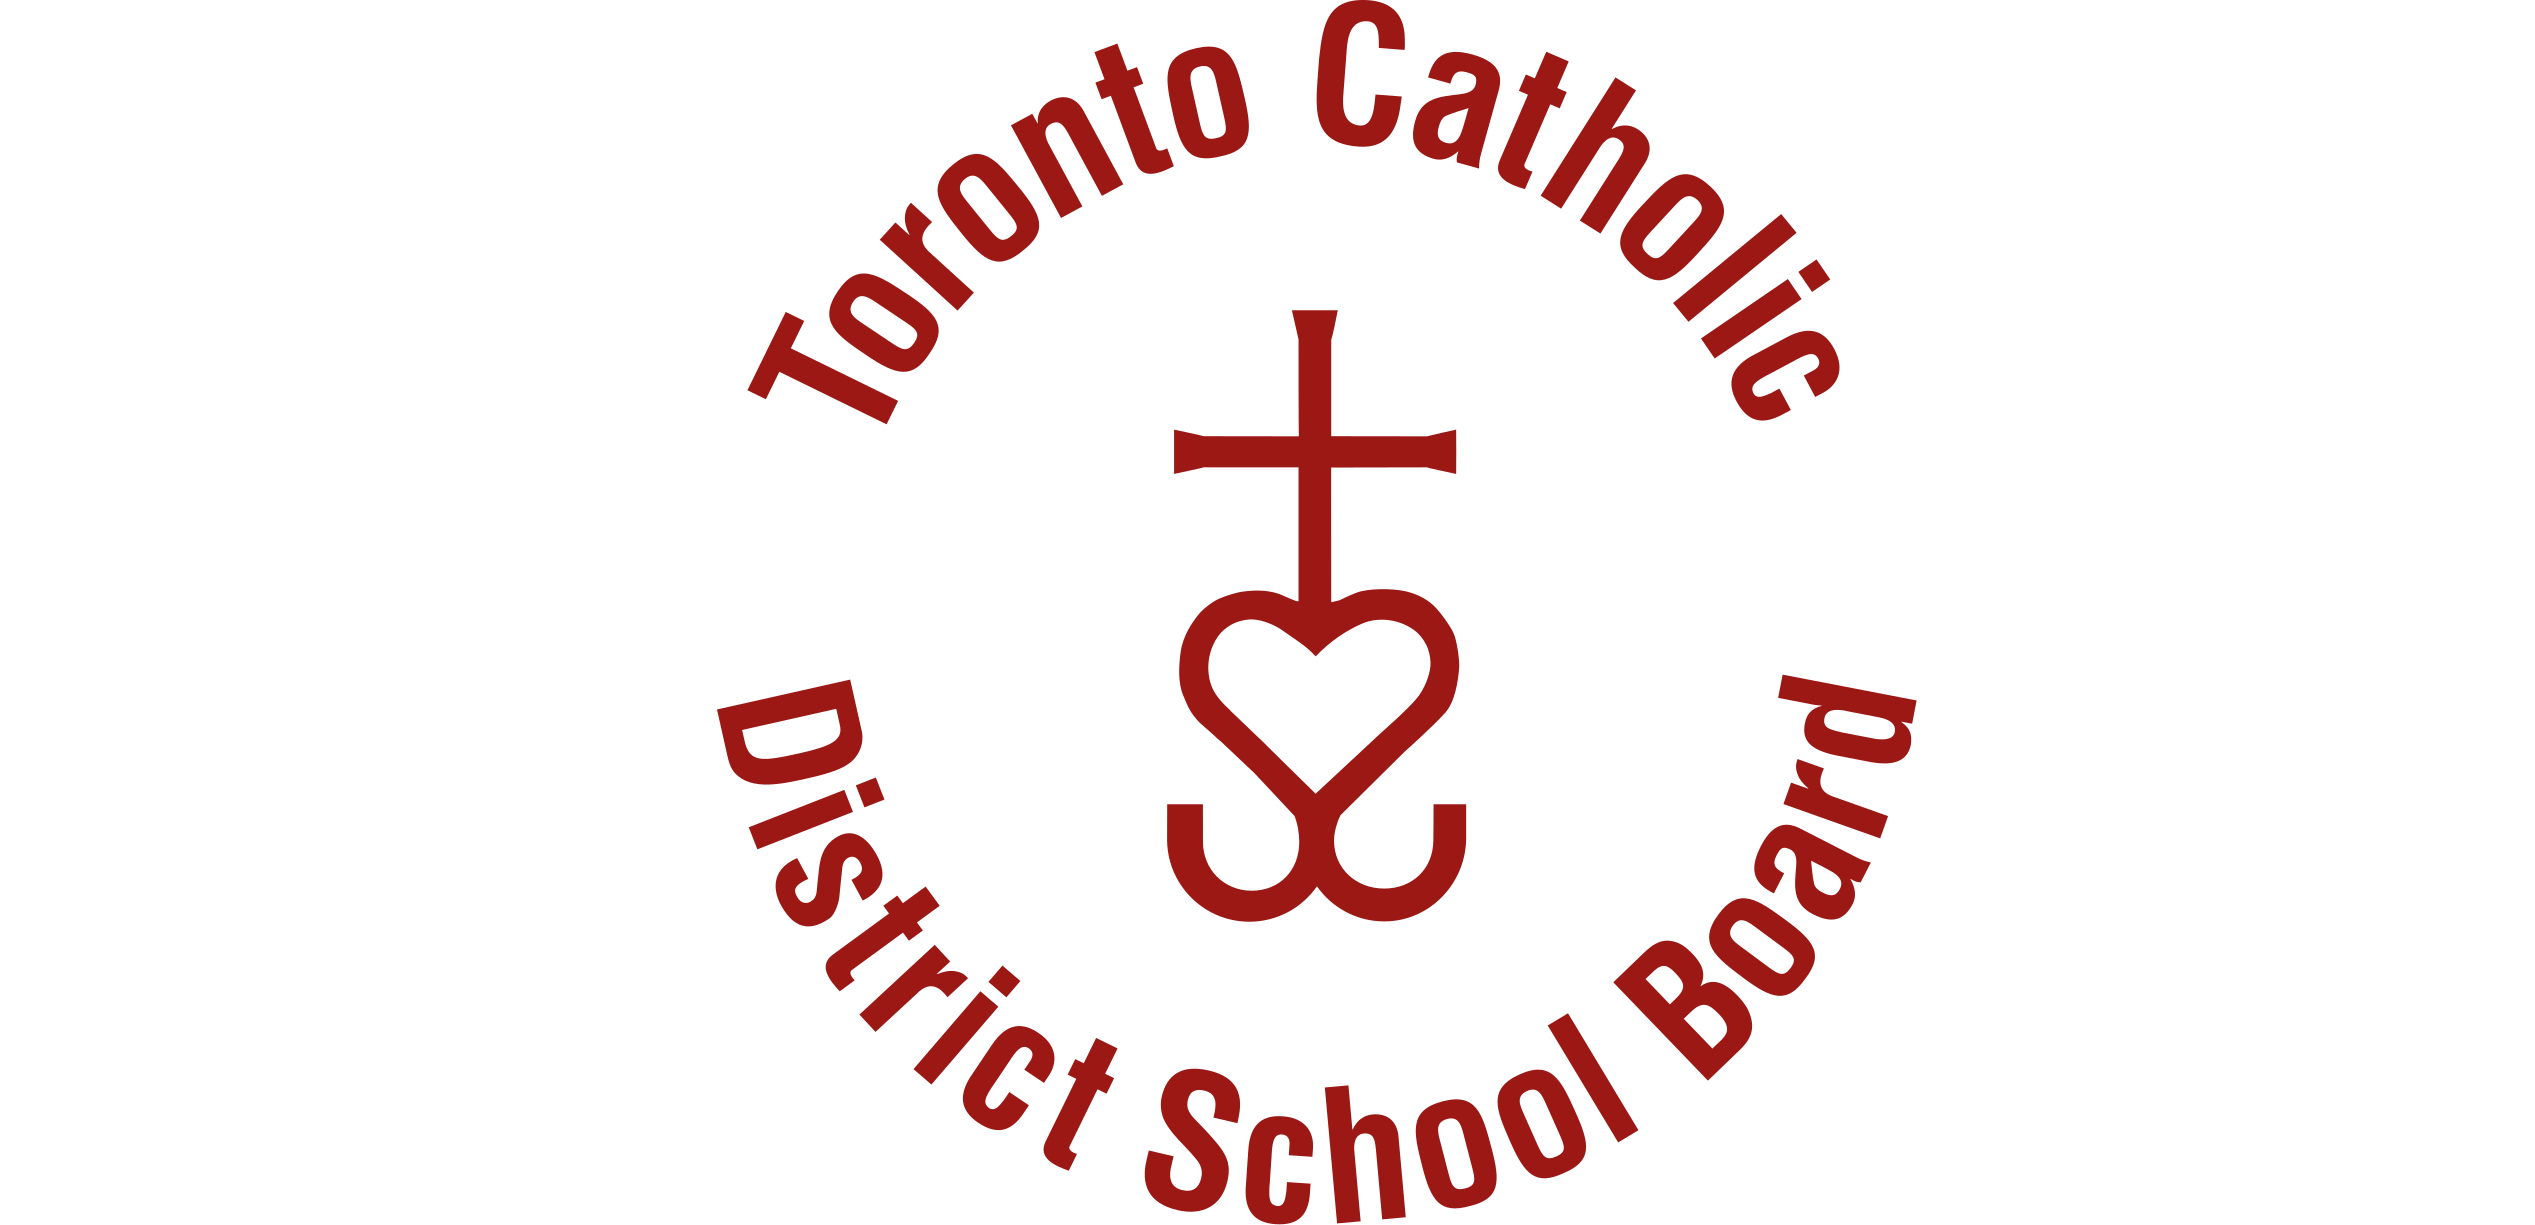 Toronto Catholic School